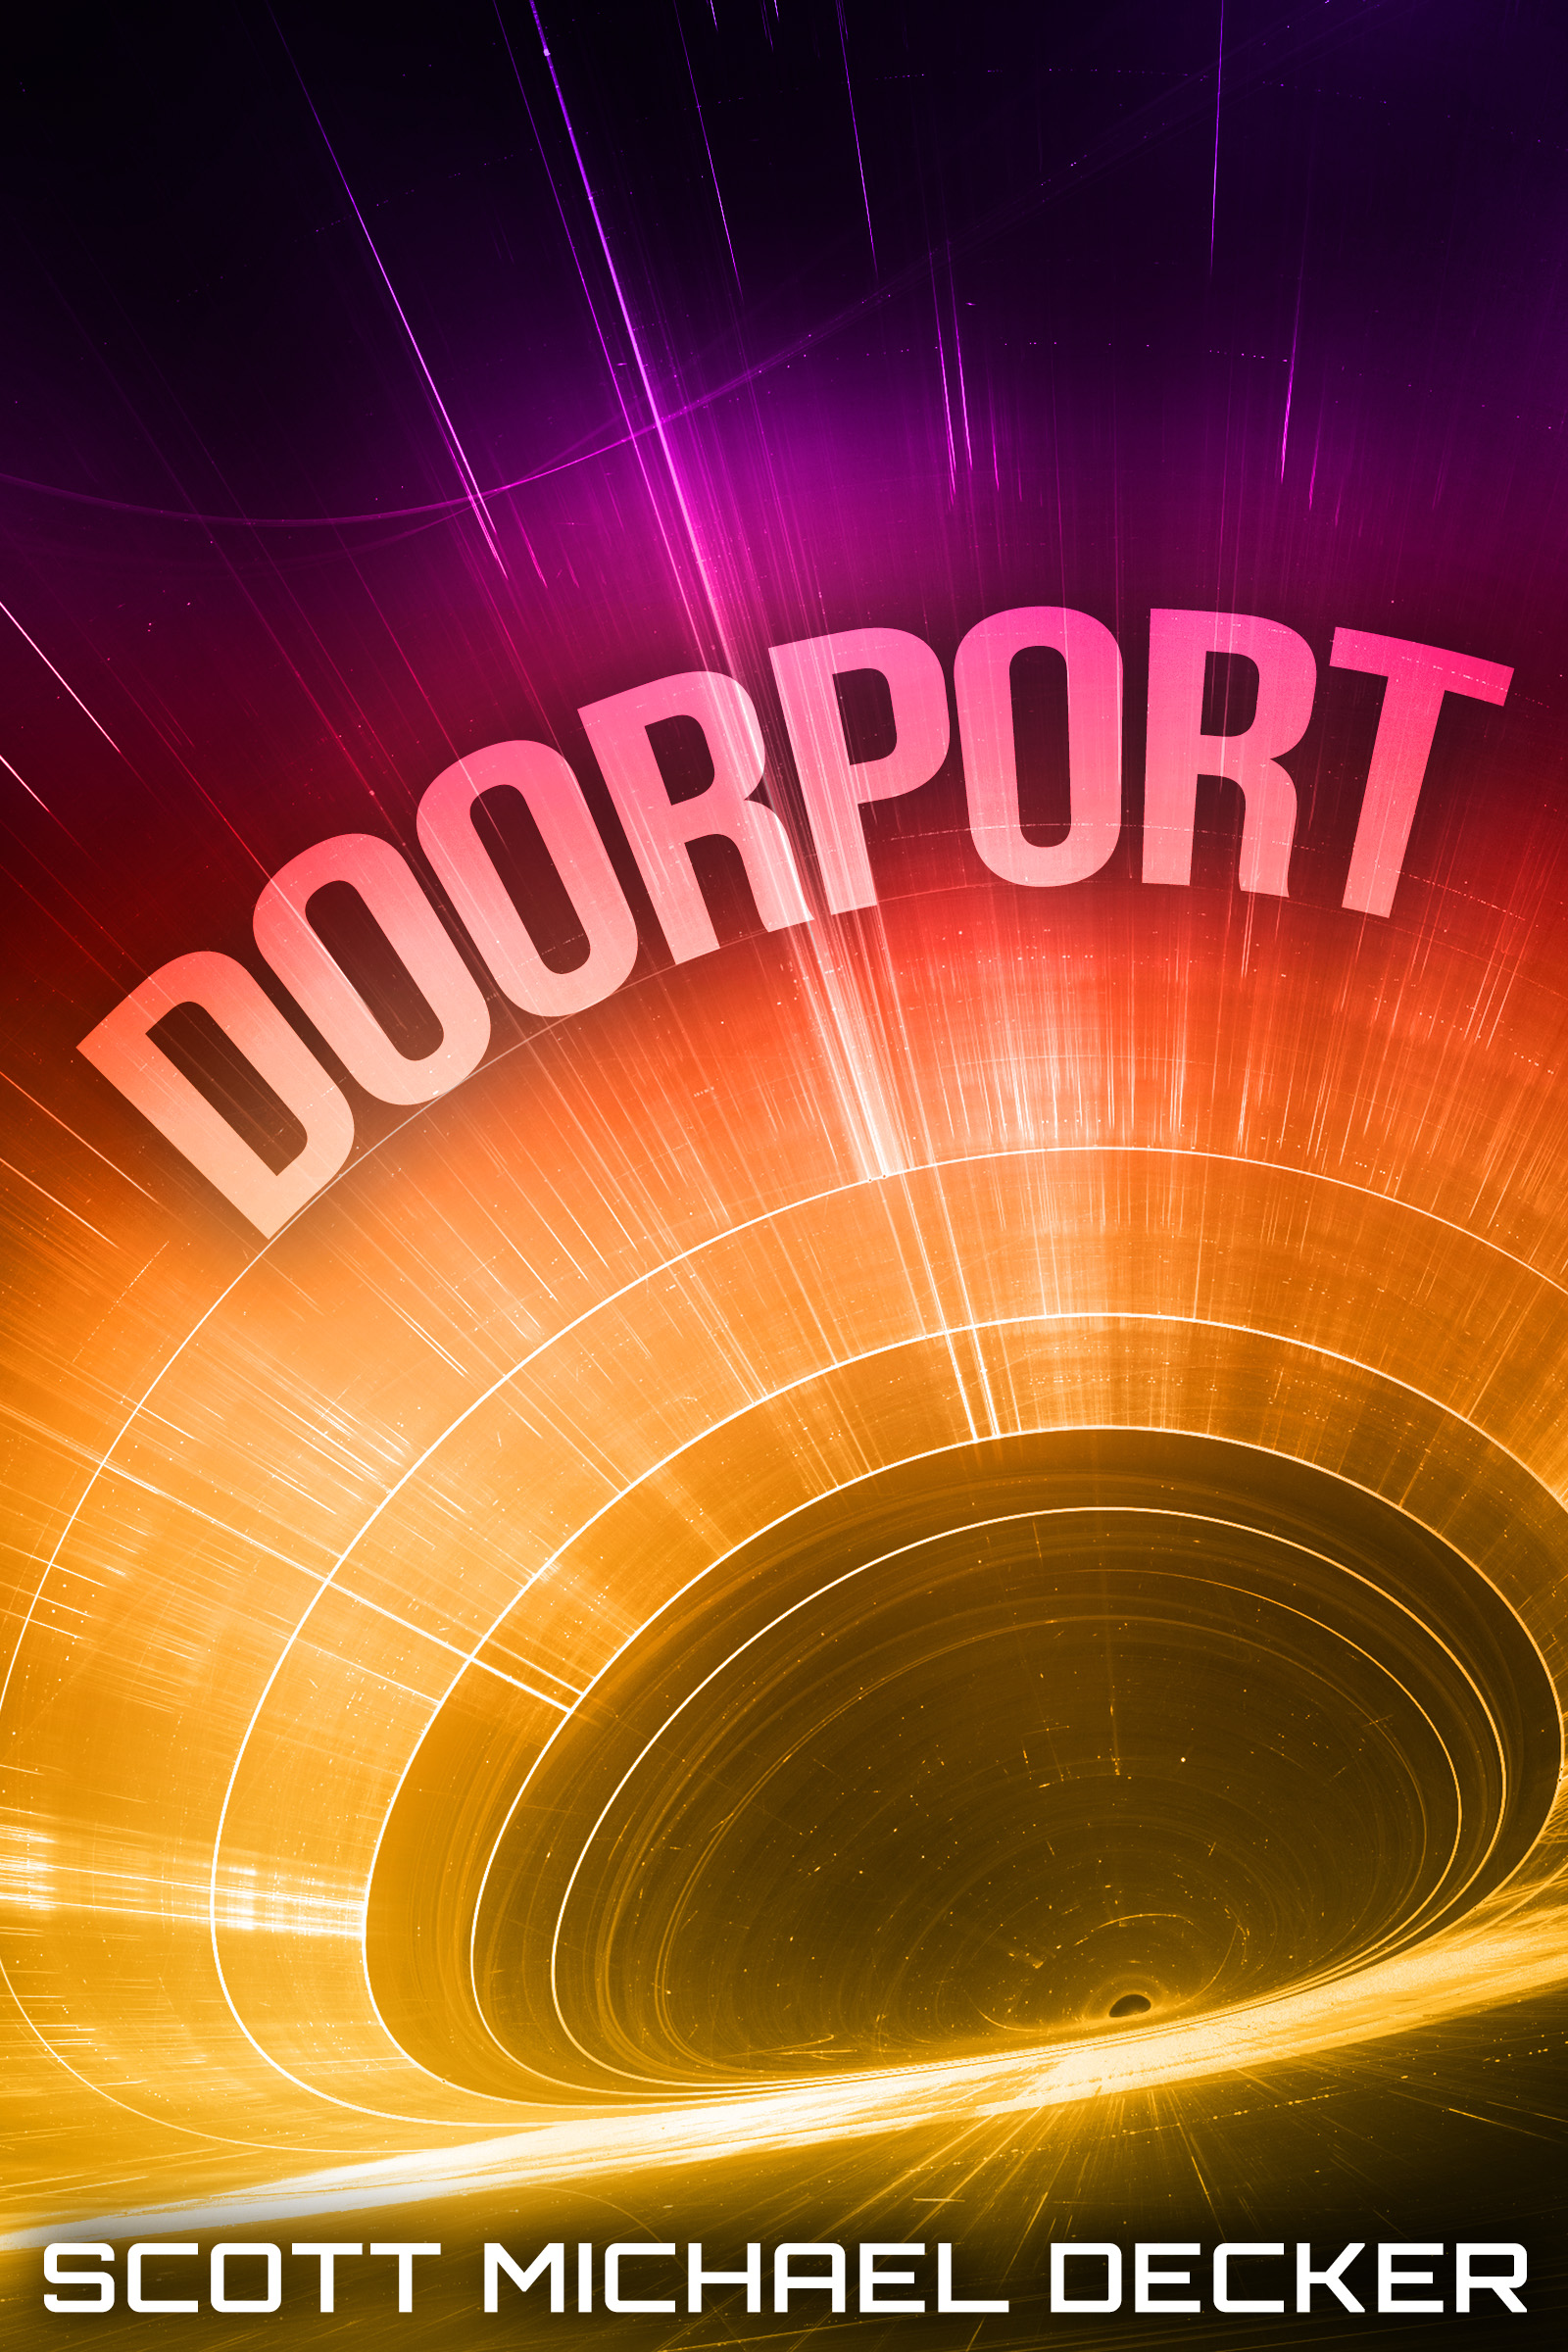 FREE: Doorport by Scott Michael Decker